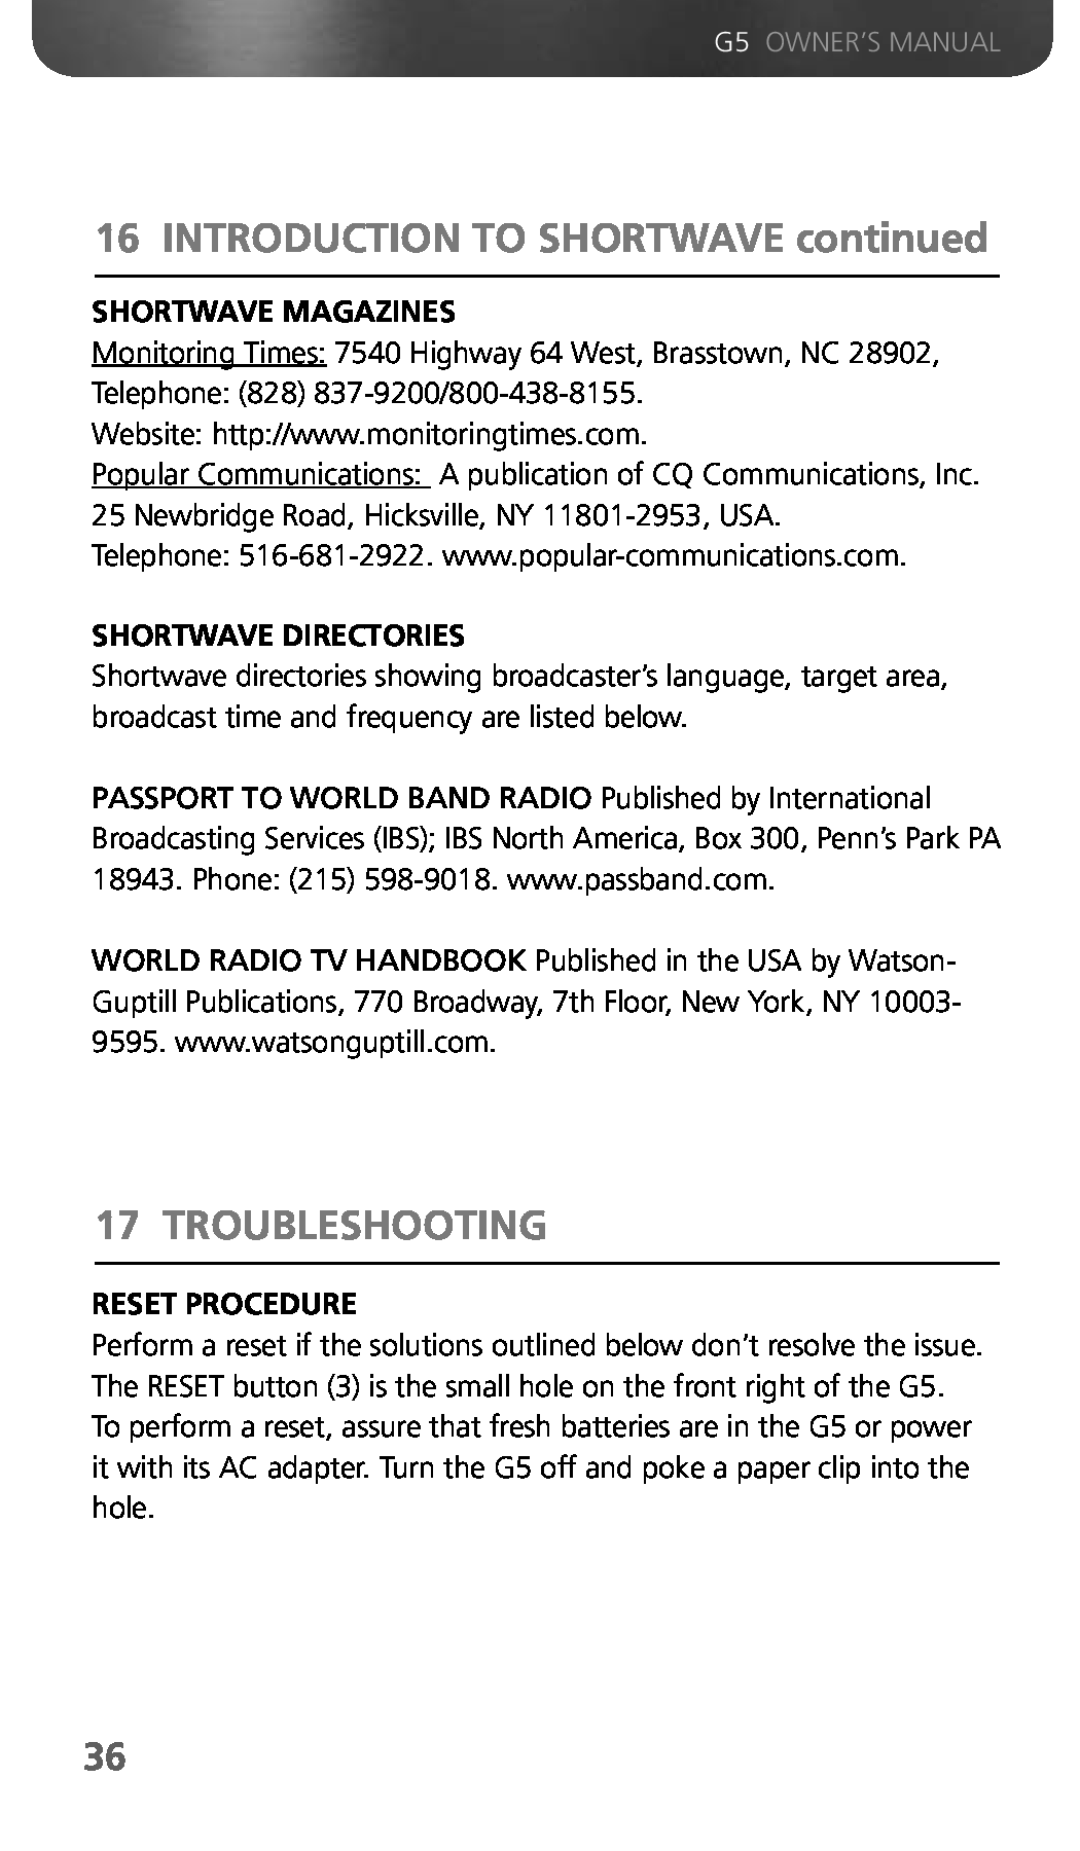 Eton G5 Troubleshooting, INTRODUCTION TO SHORTWAVE continued, Shortwave Magazines, Shortwave Directories, Reset Procedure 